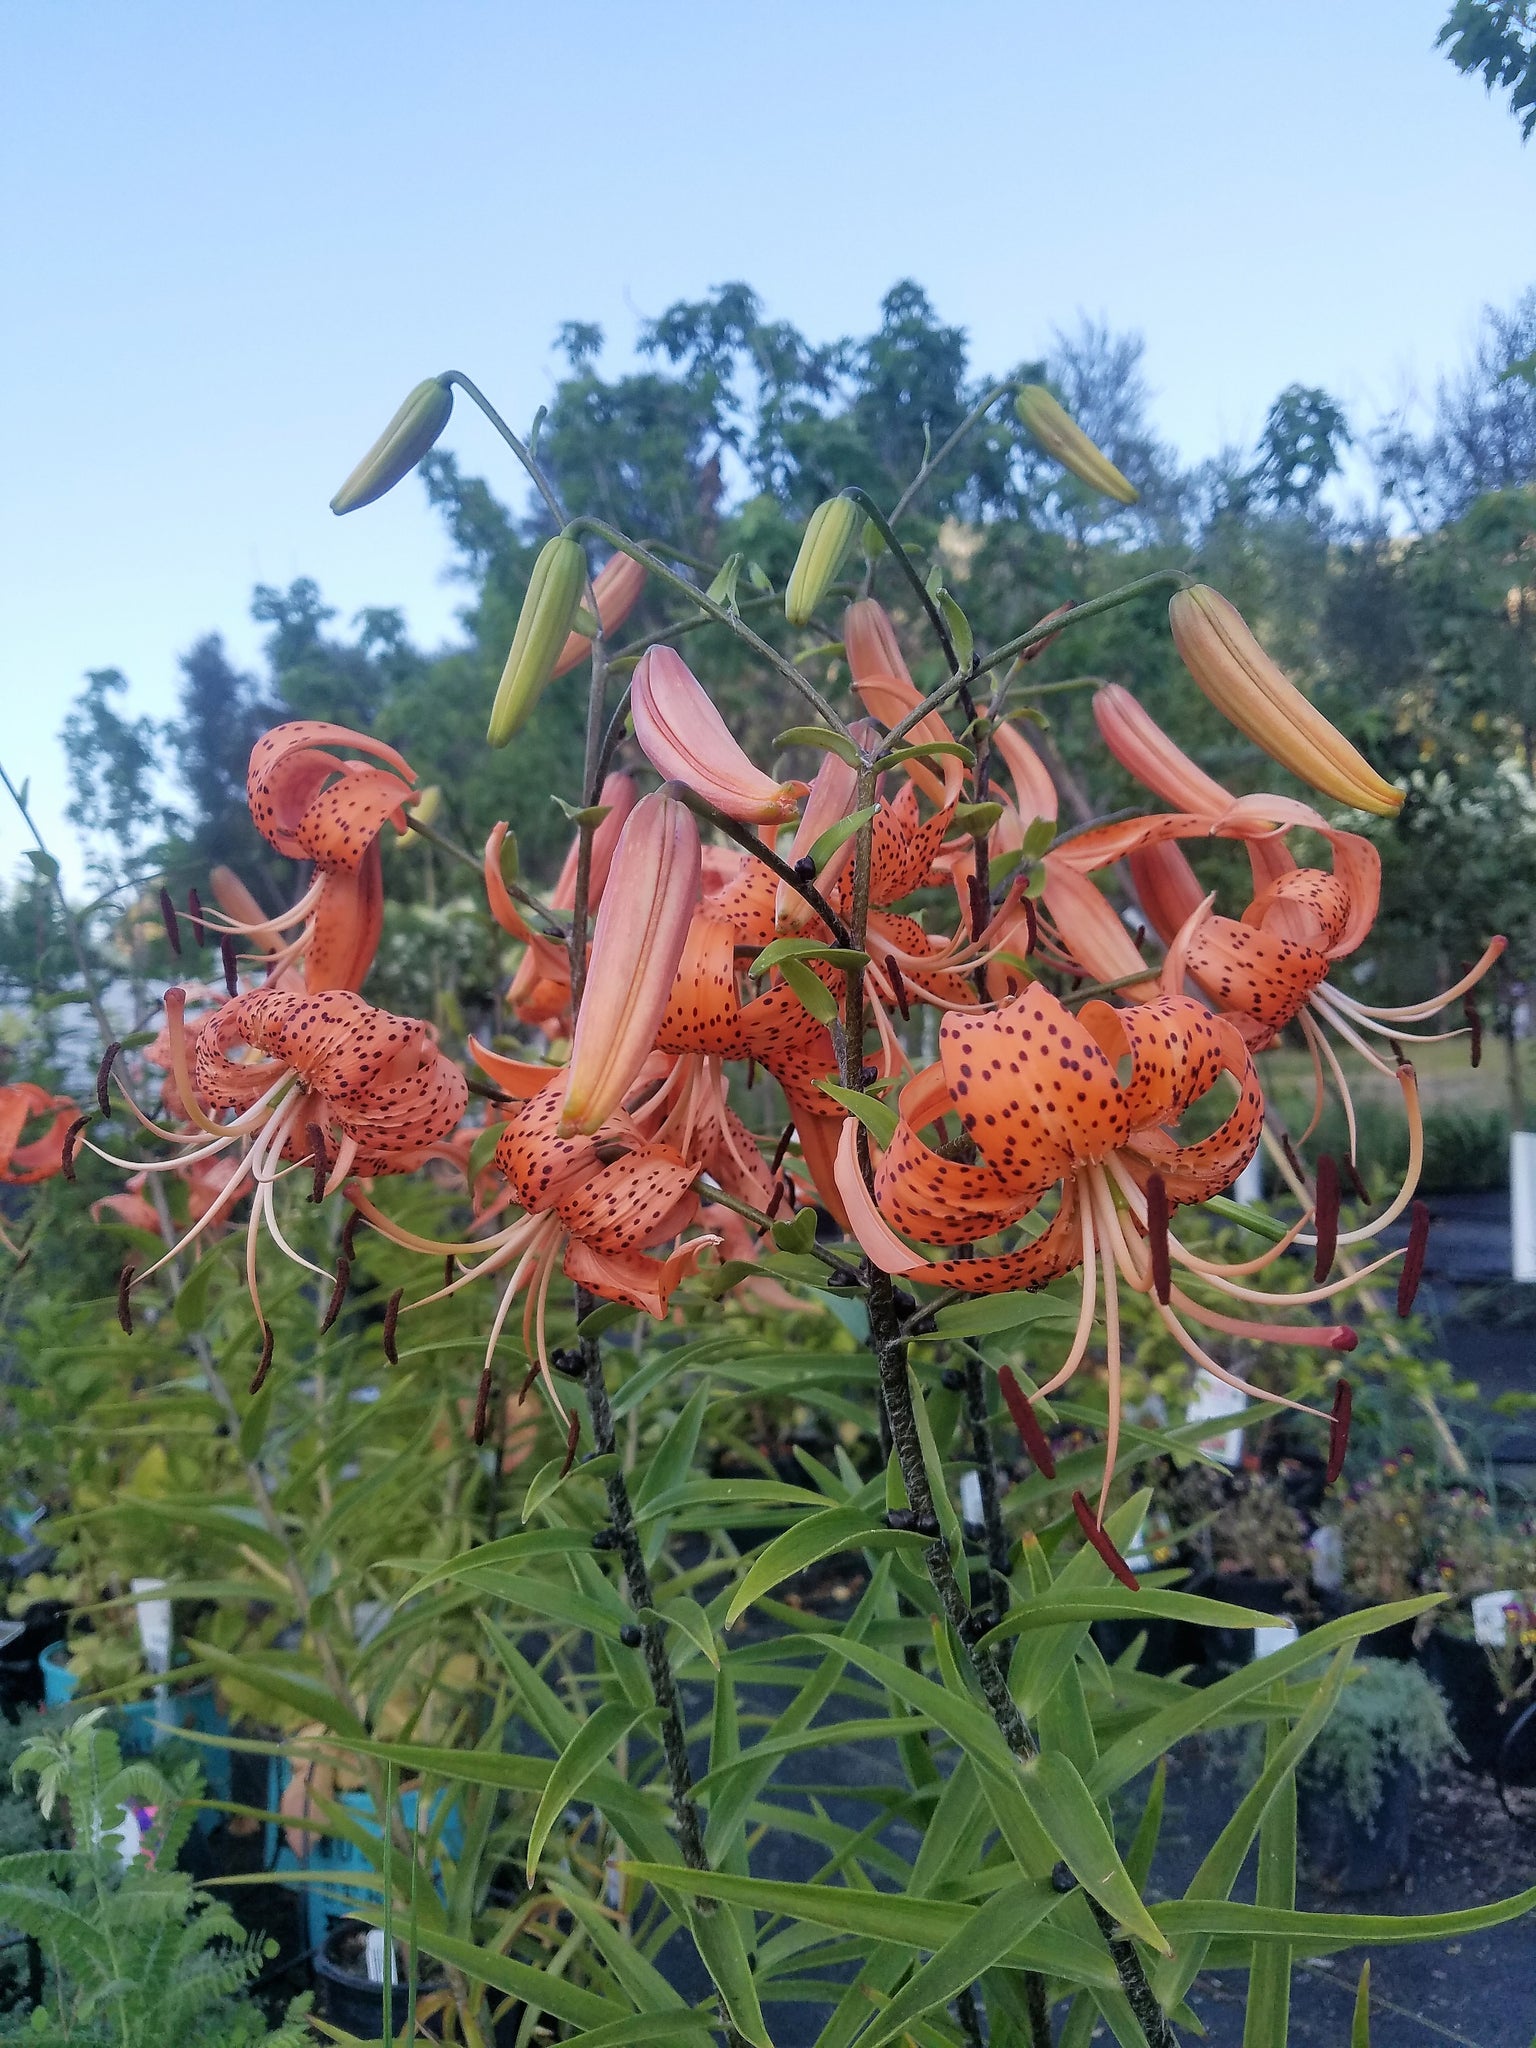 Buy Splendens Orange Tiger Lily Plants, Free Shipping